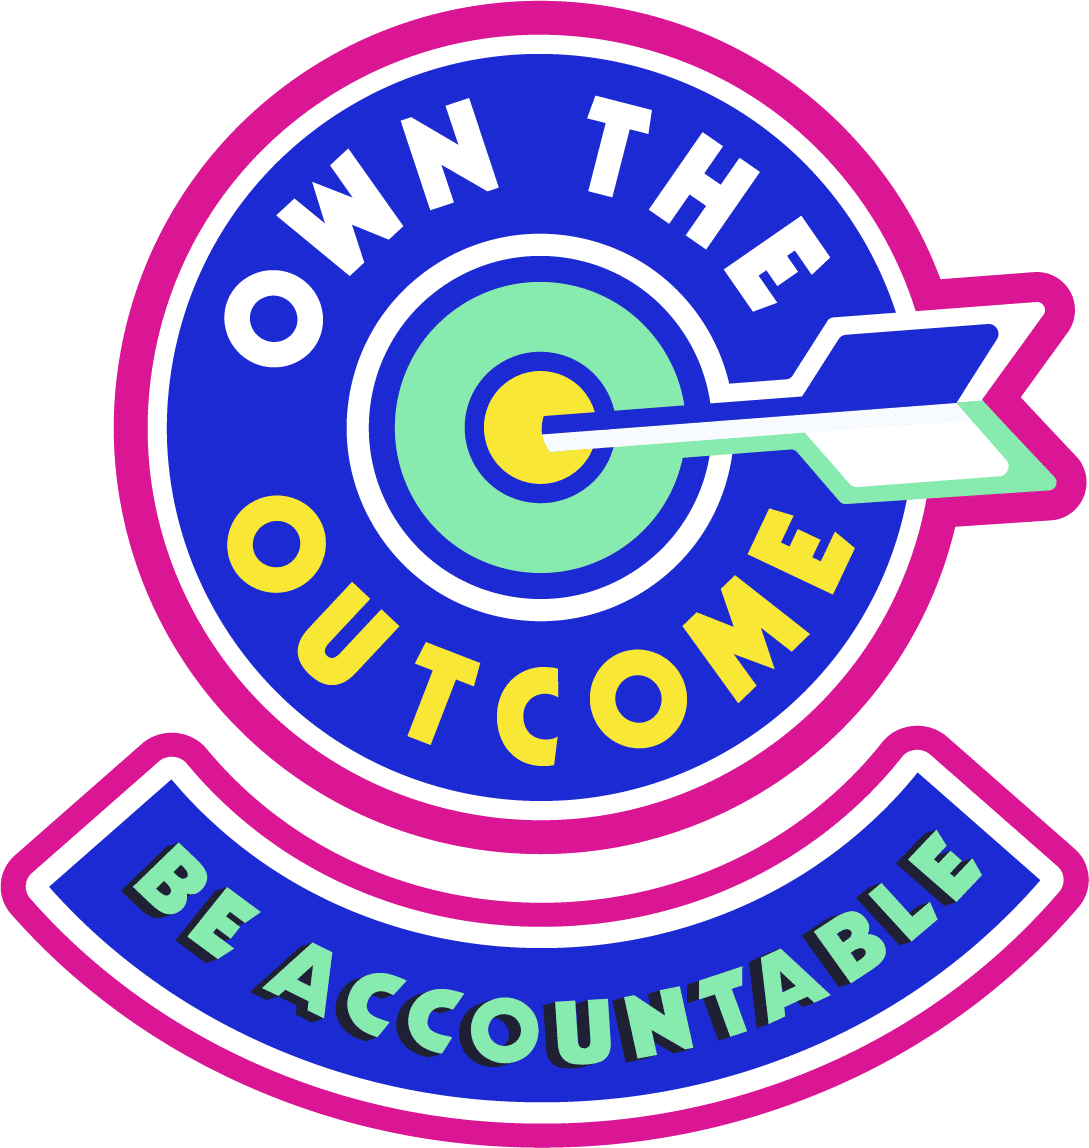 Casumo Values - Own the Outcome